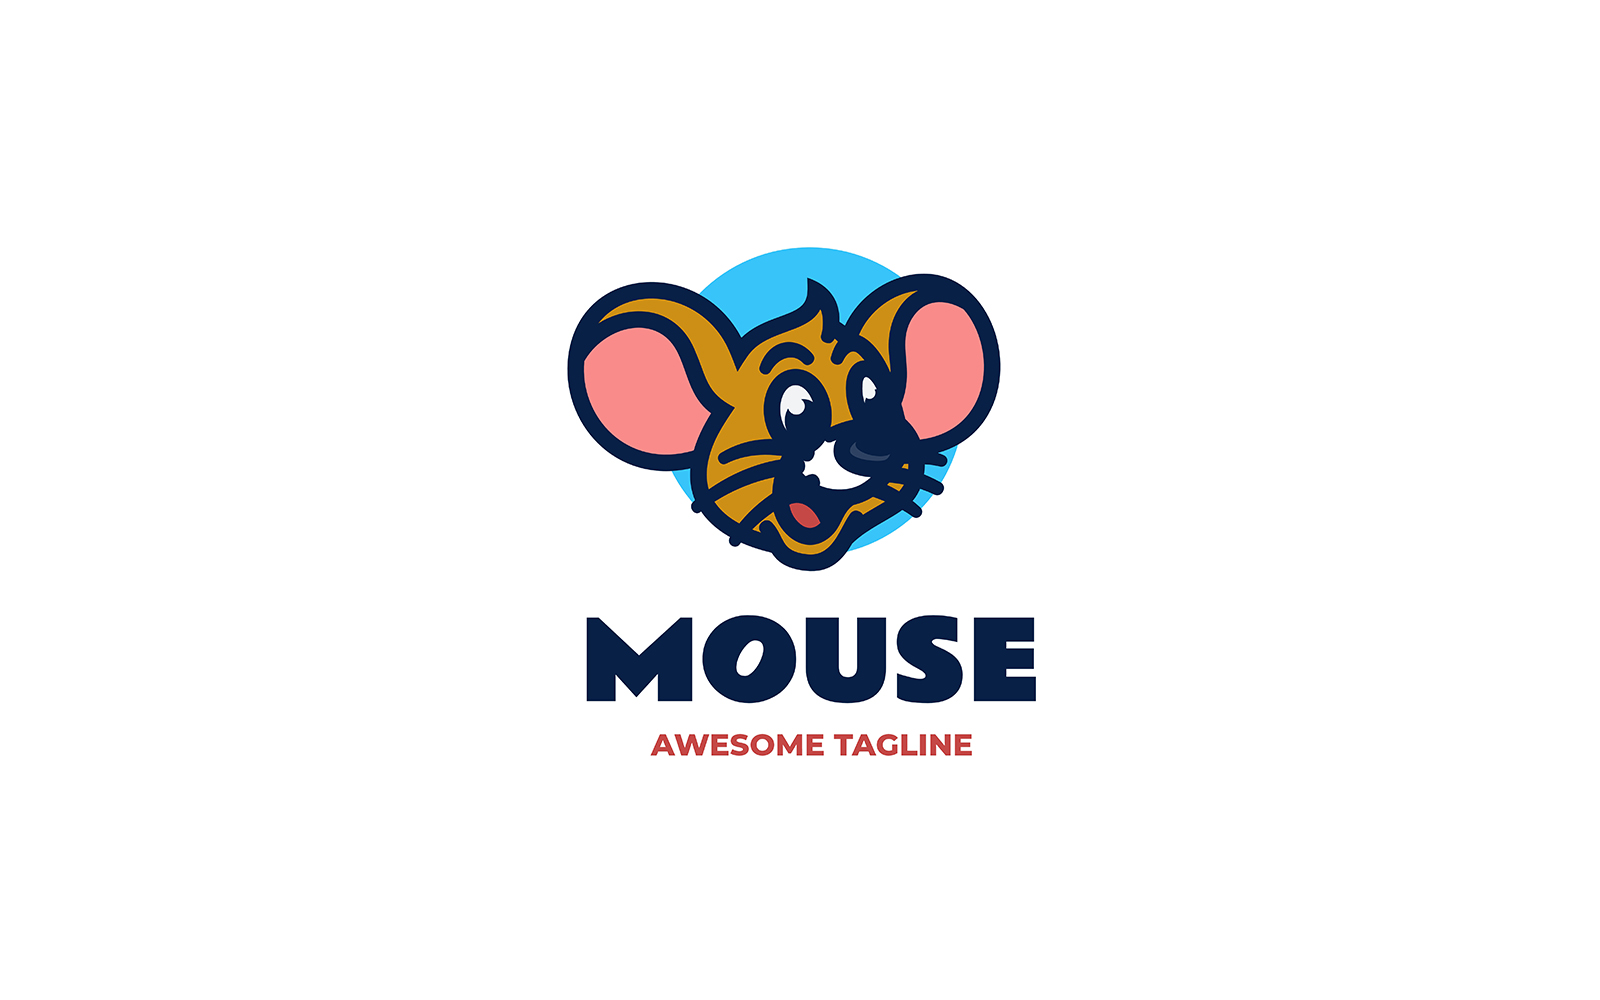 Mouse Mascot Cartoon Logo 5